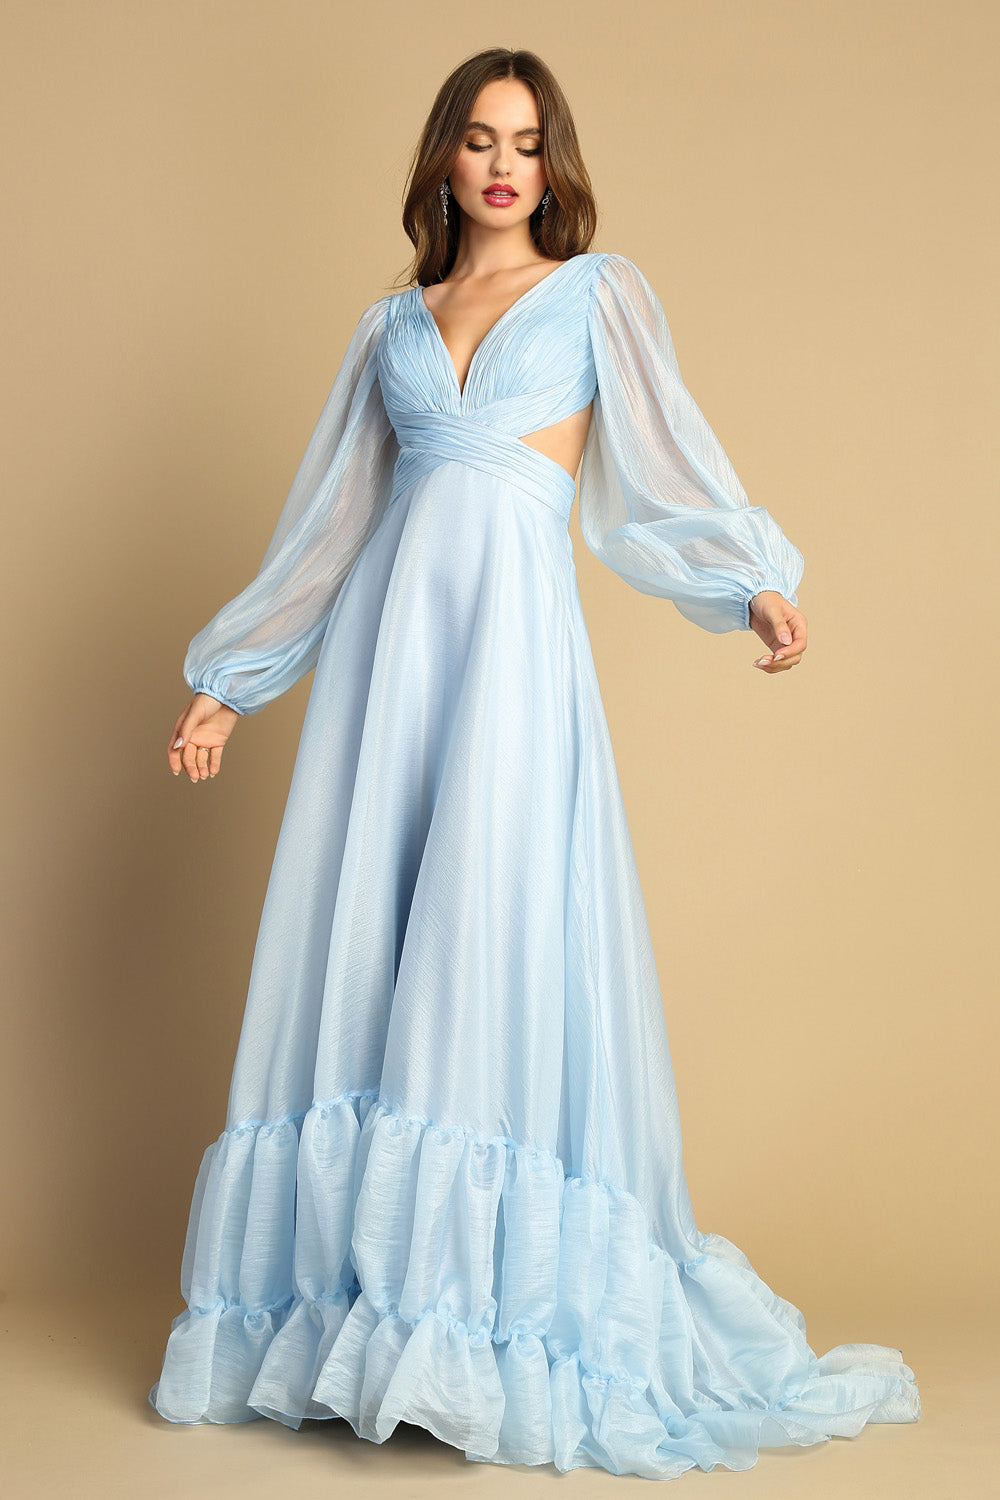 Lovely Navy Blue Gown - Long Sleeve Maxi Dress - Maxi Dress - Lulus